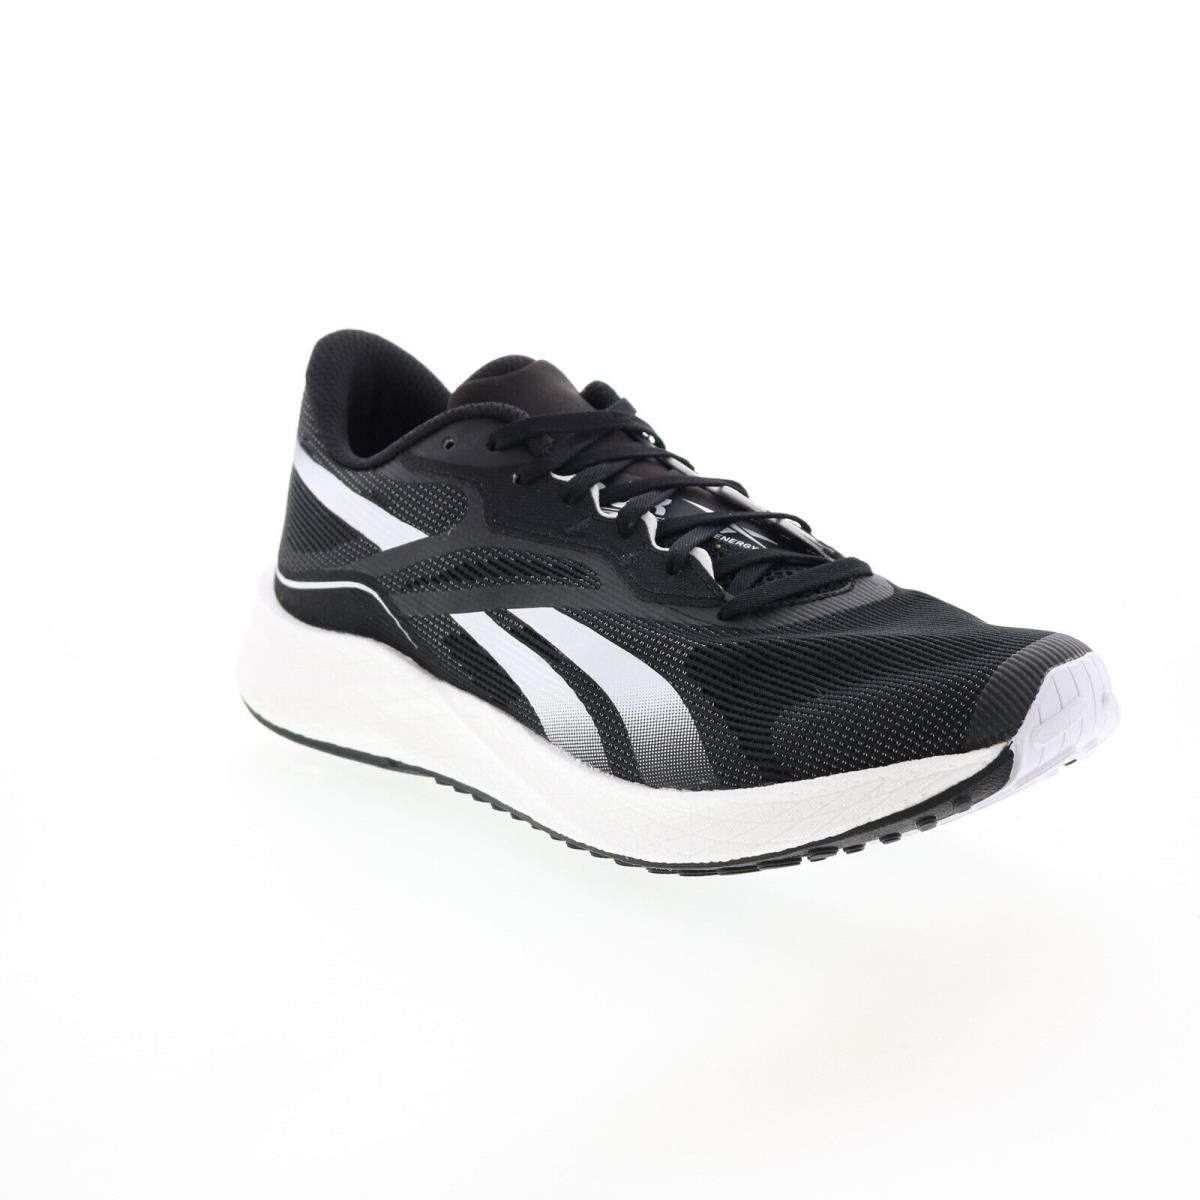 Reebok Floatride Energy 3.0 Mens Black Canvas Athletic Running Shoes - Black